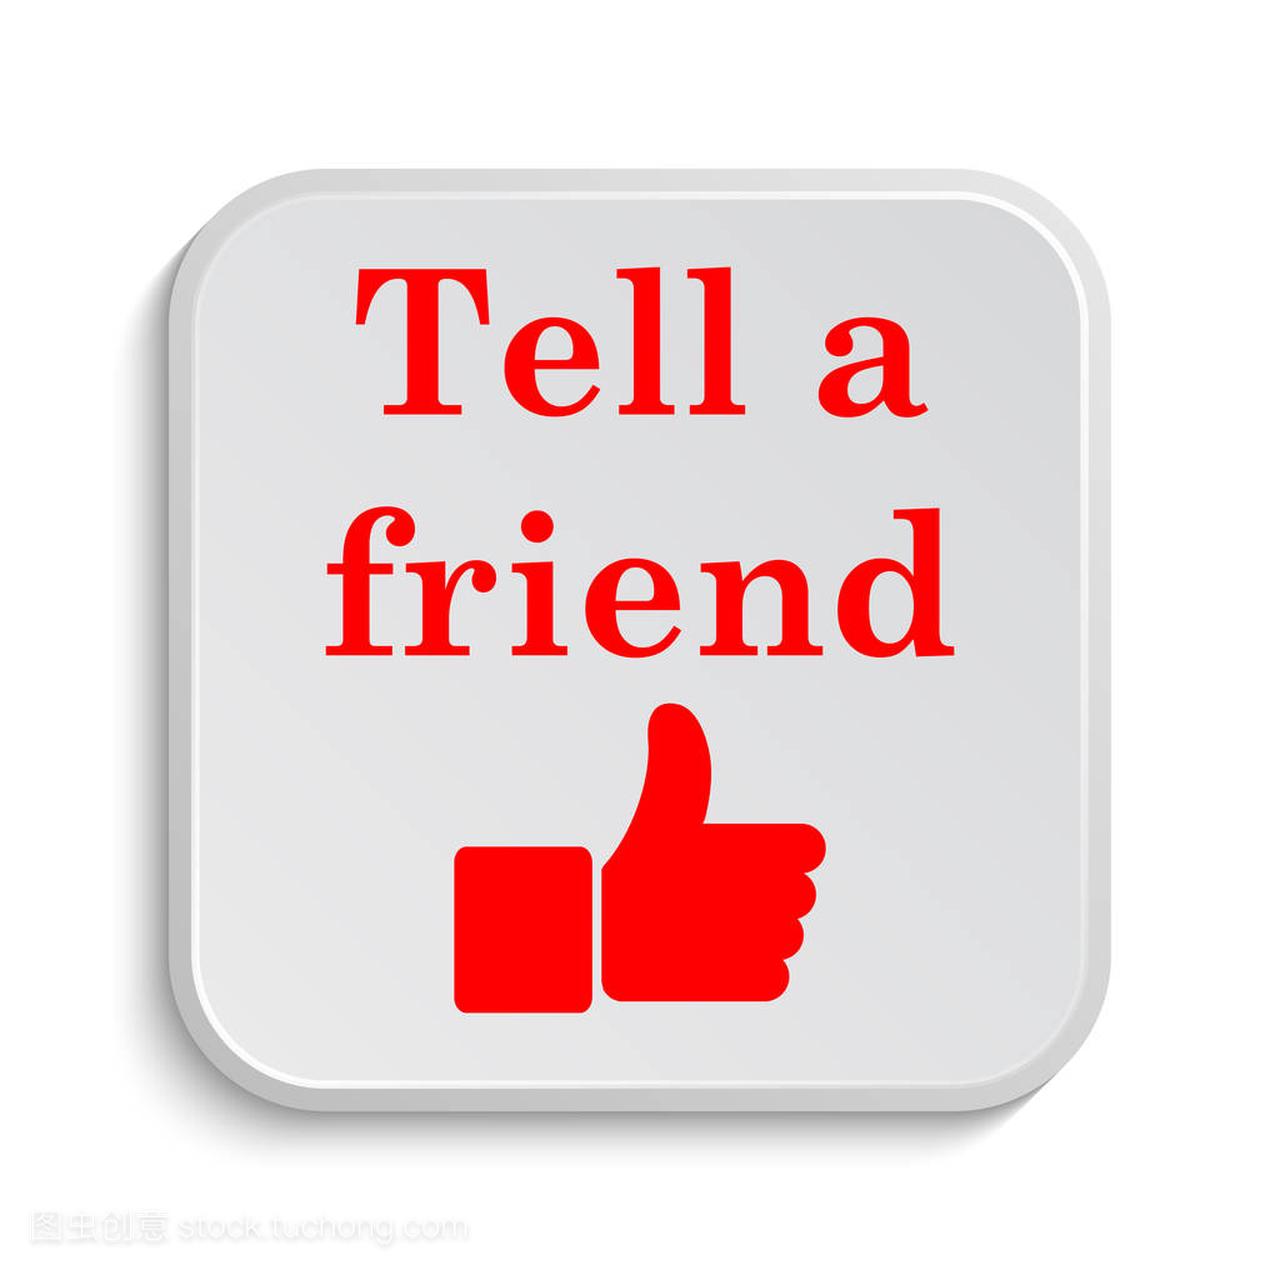 Tell a friend icon. Internet button on white 